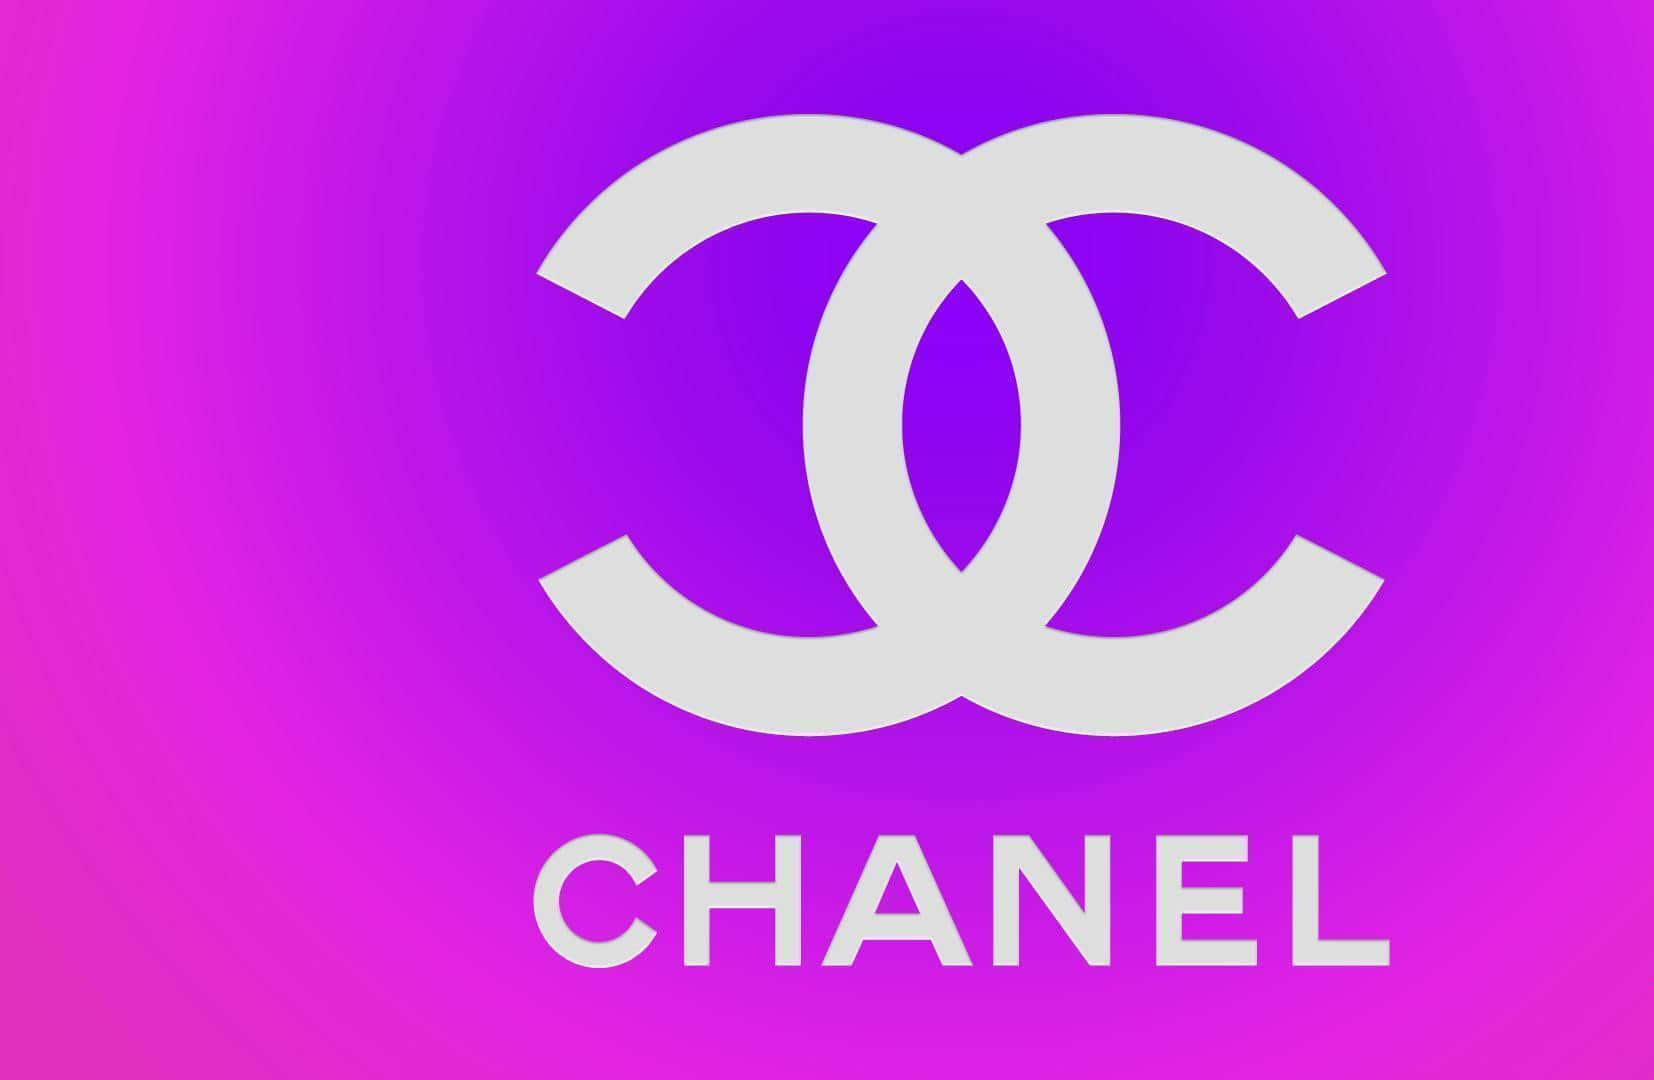 Iconic Chanel Logo in elegant black and white